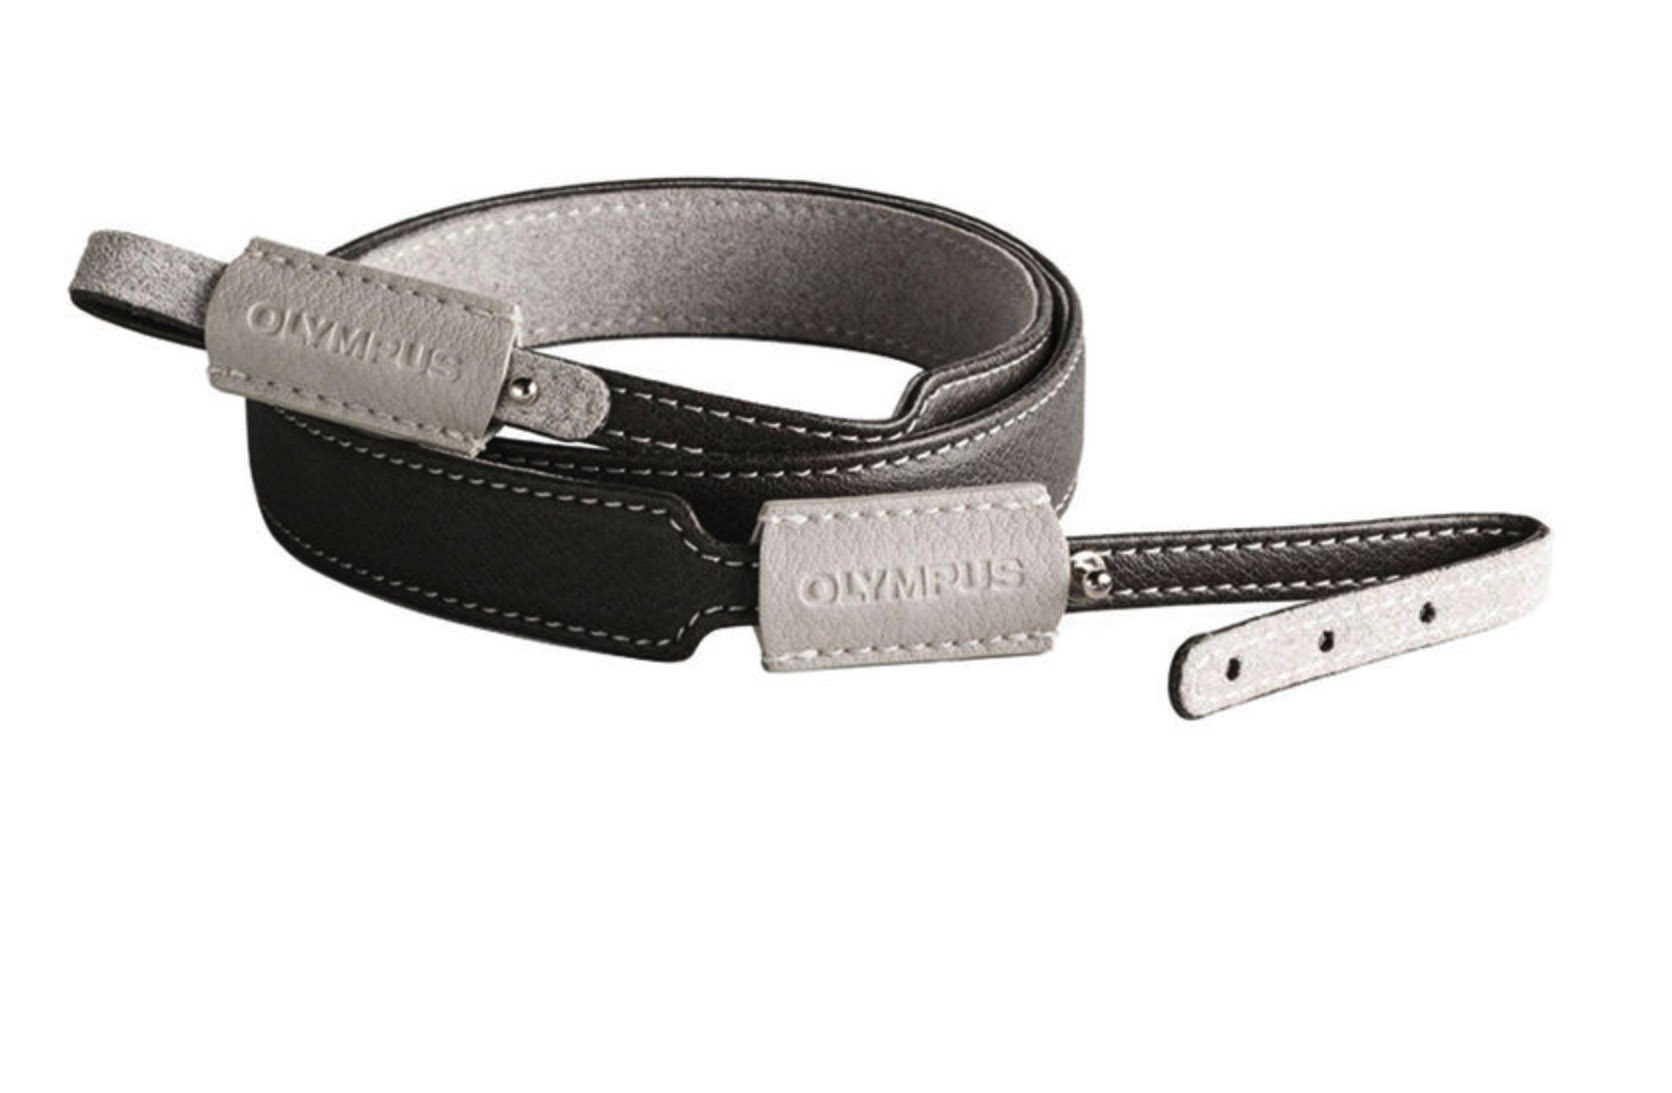 http://thedigitalstory.com/2015/04/15/olympus-leather-strap.jpg